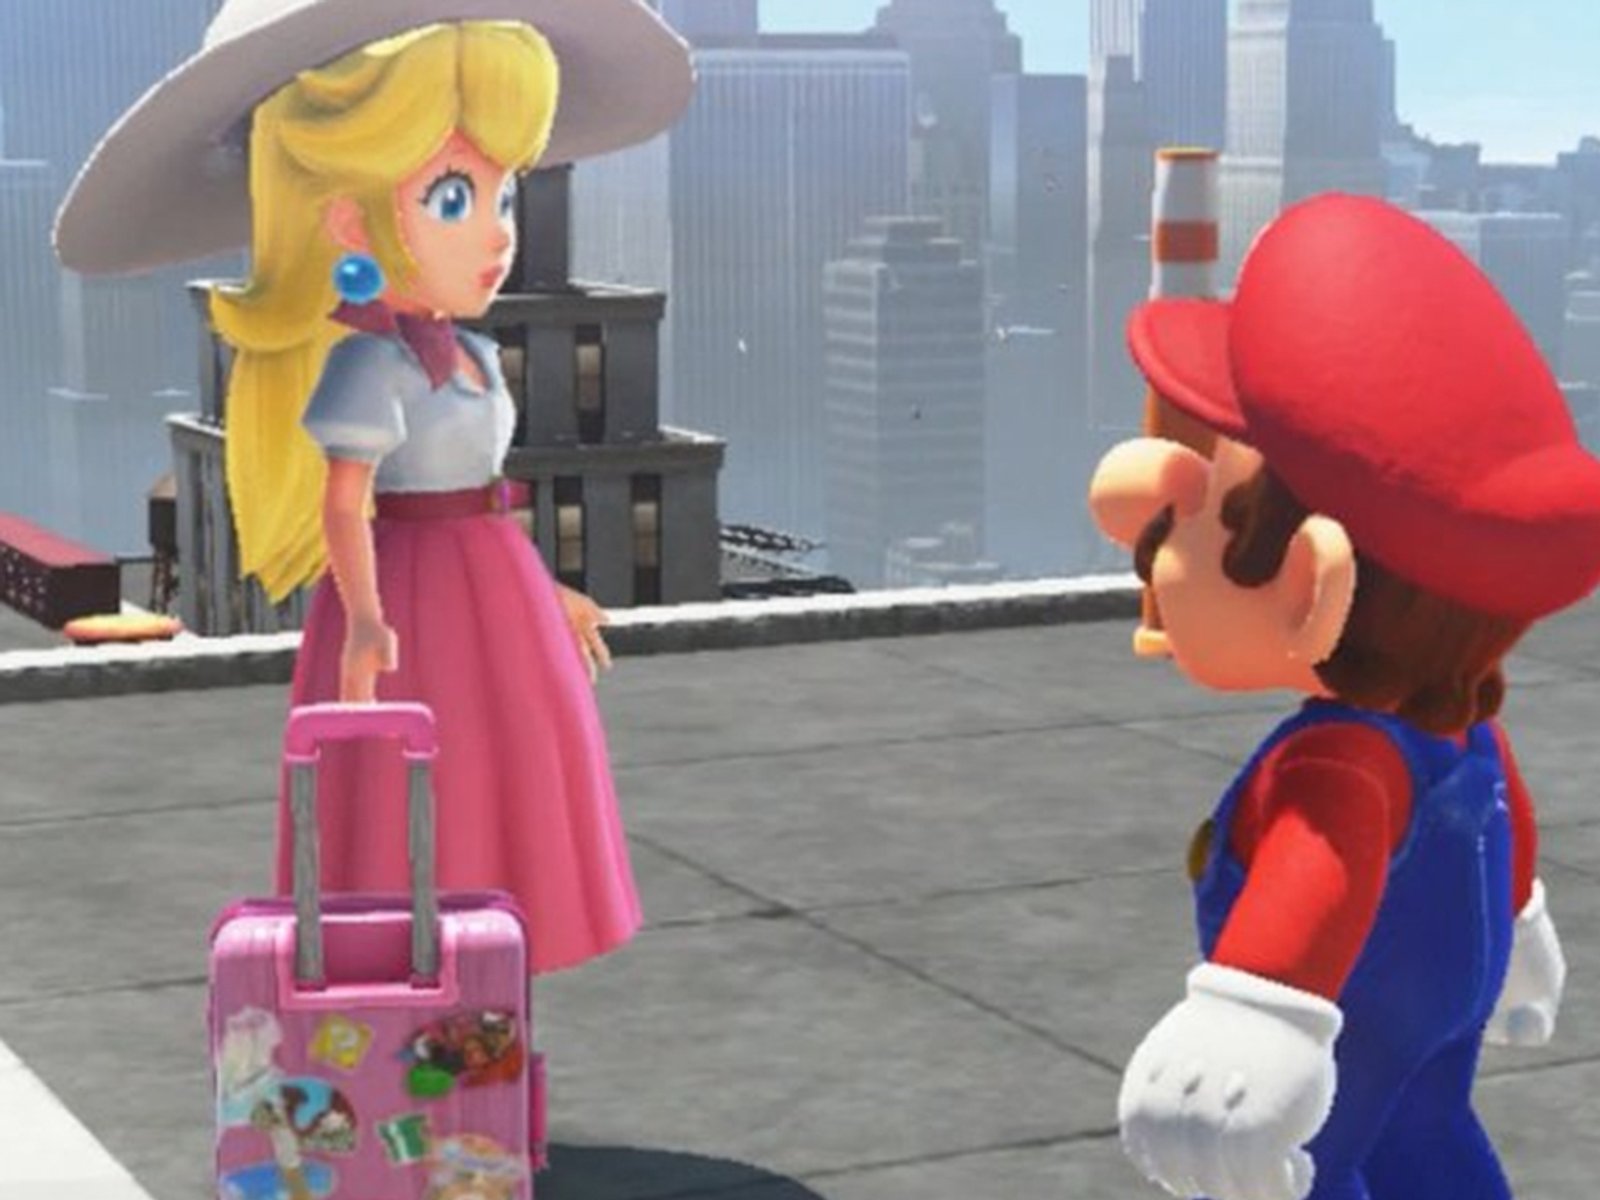 Super Mario Odyssey: Alle Peach-Fundorte